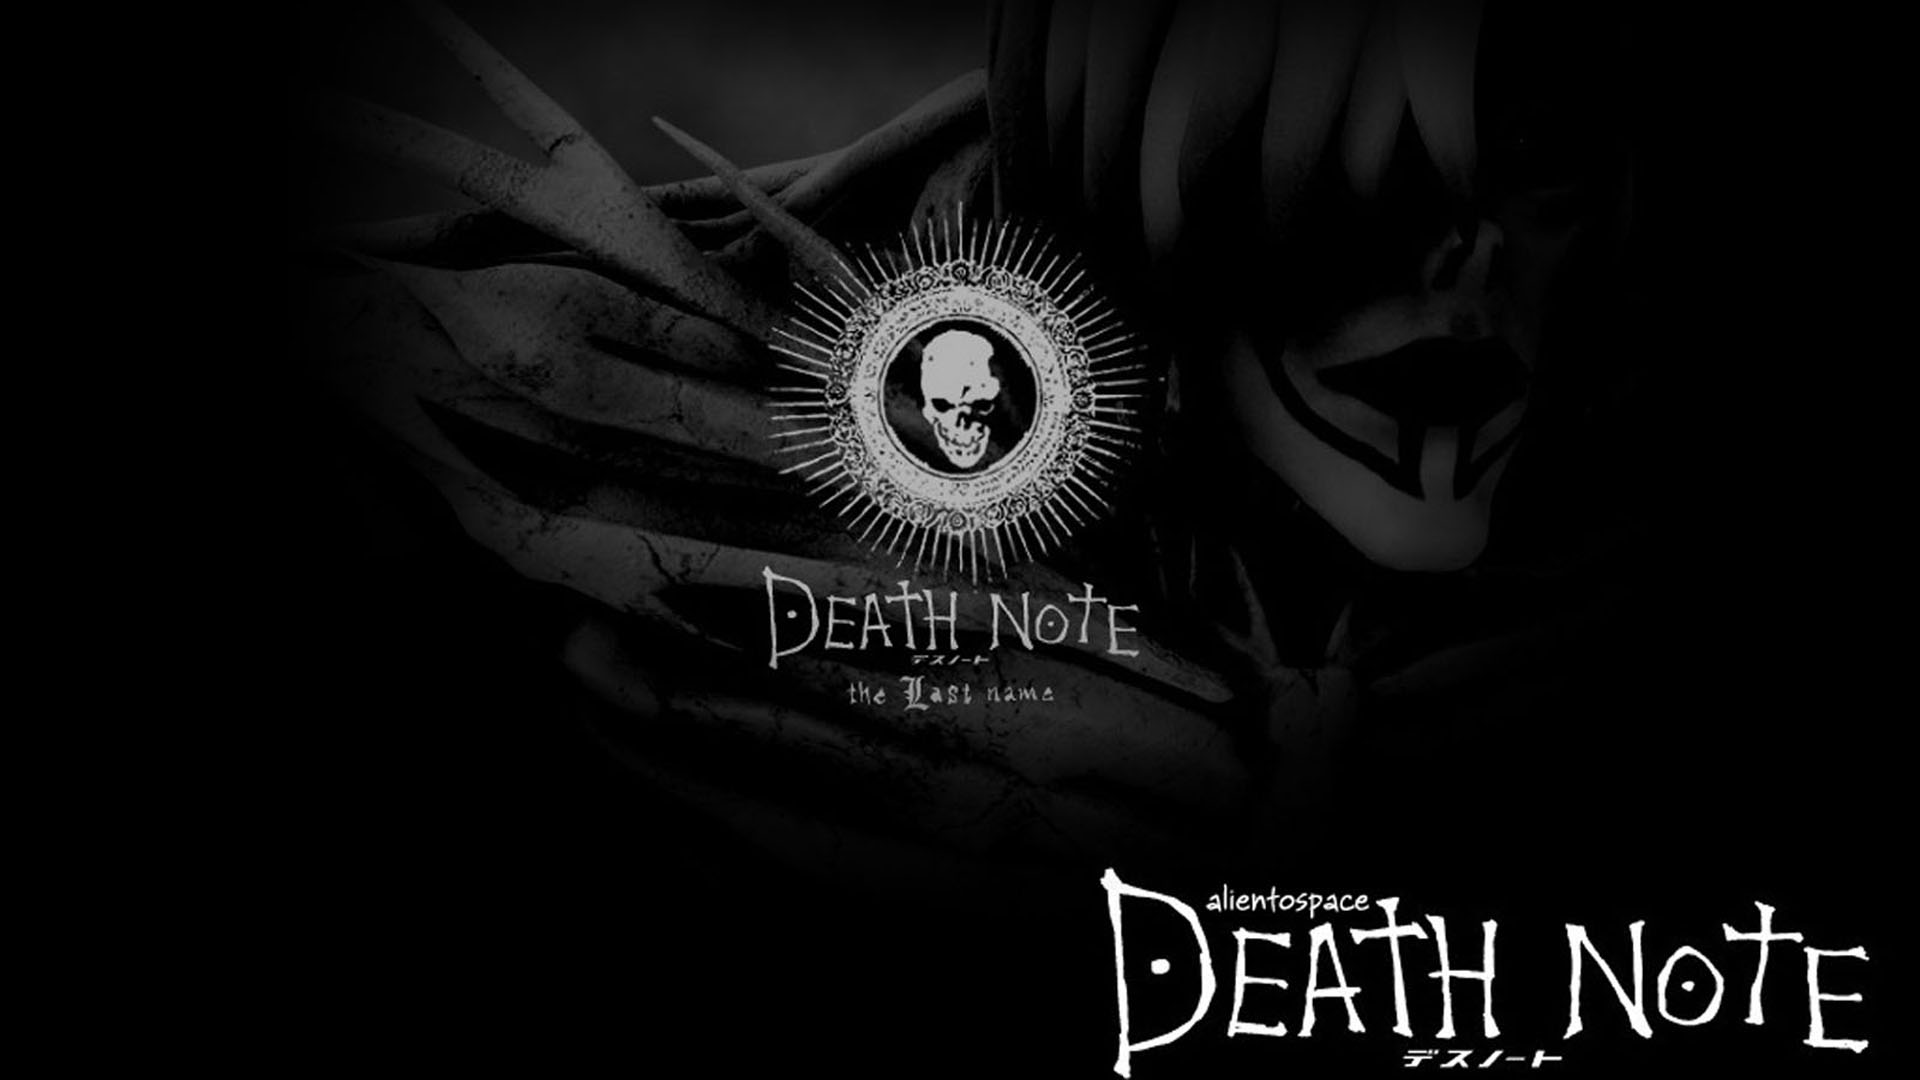 Death Note Wallpaper 1920x1080 - WallpaperSafari